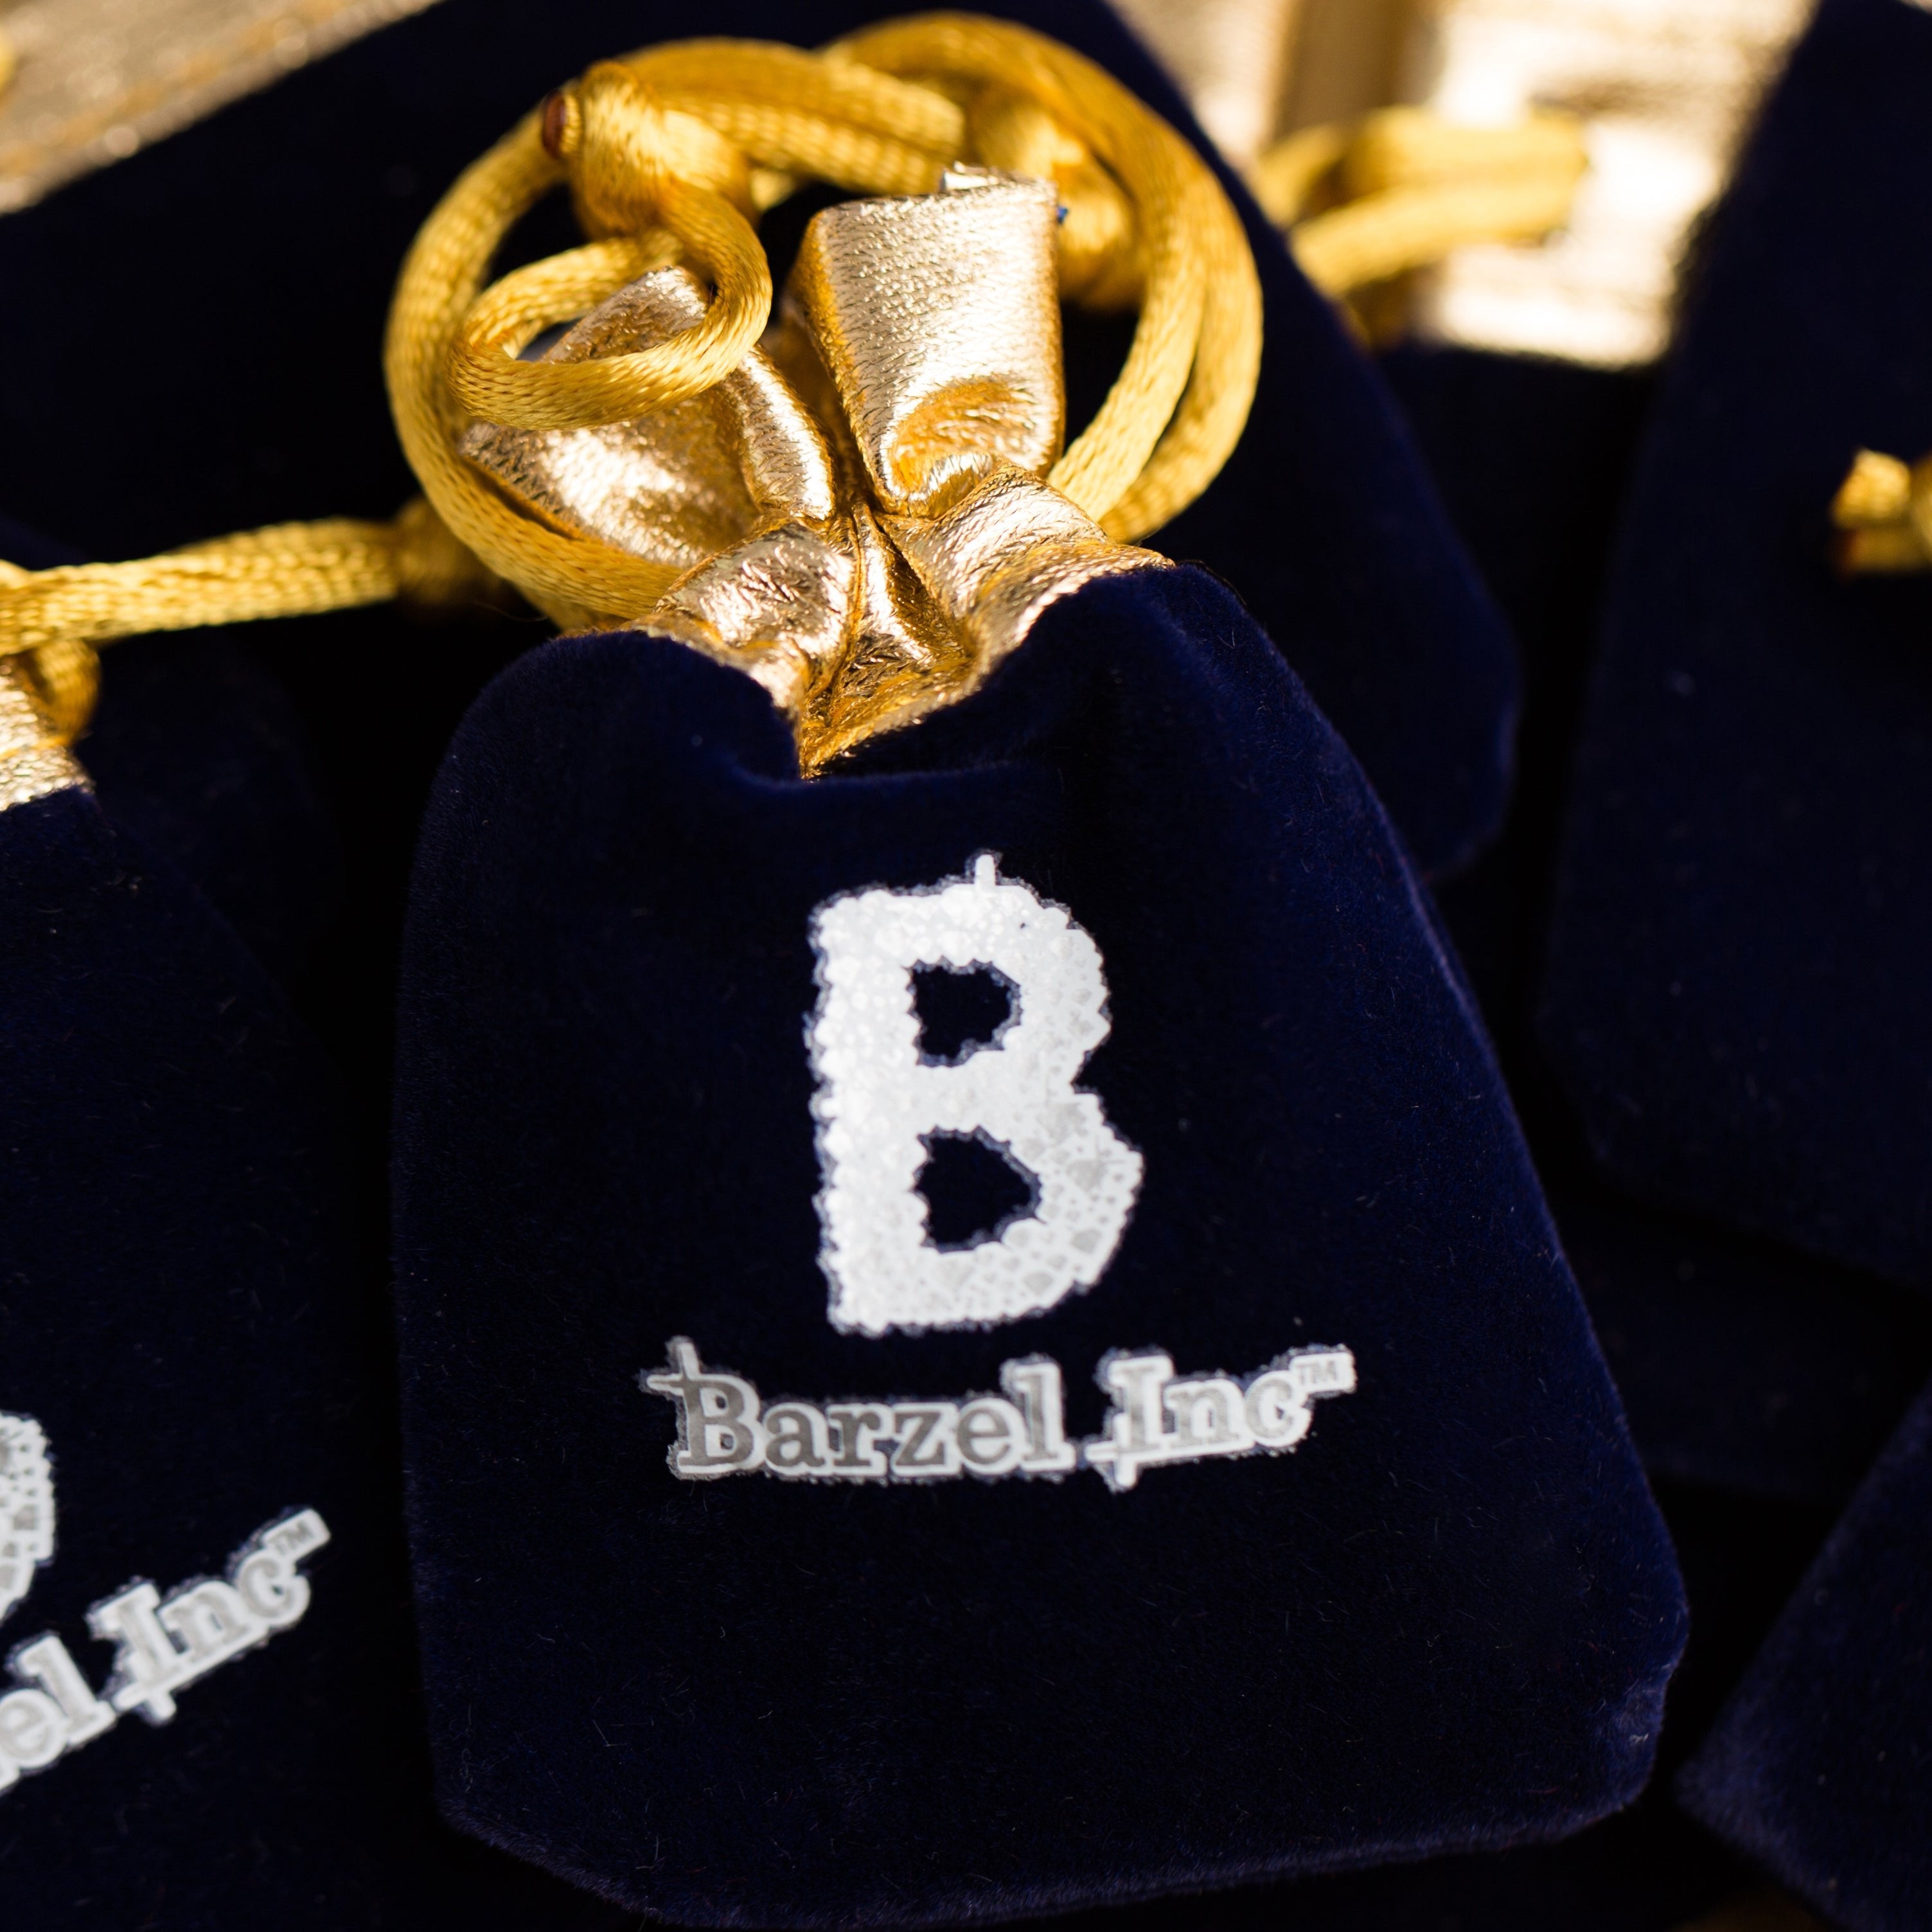 18K Gold Plated Multi-Colored Ball Hoop Earrings